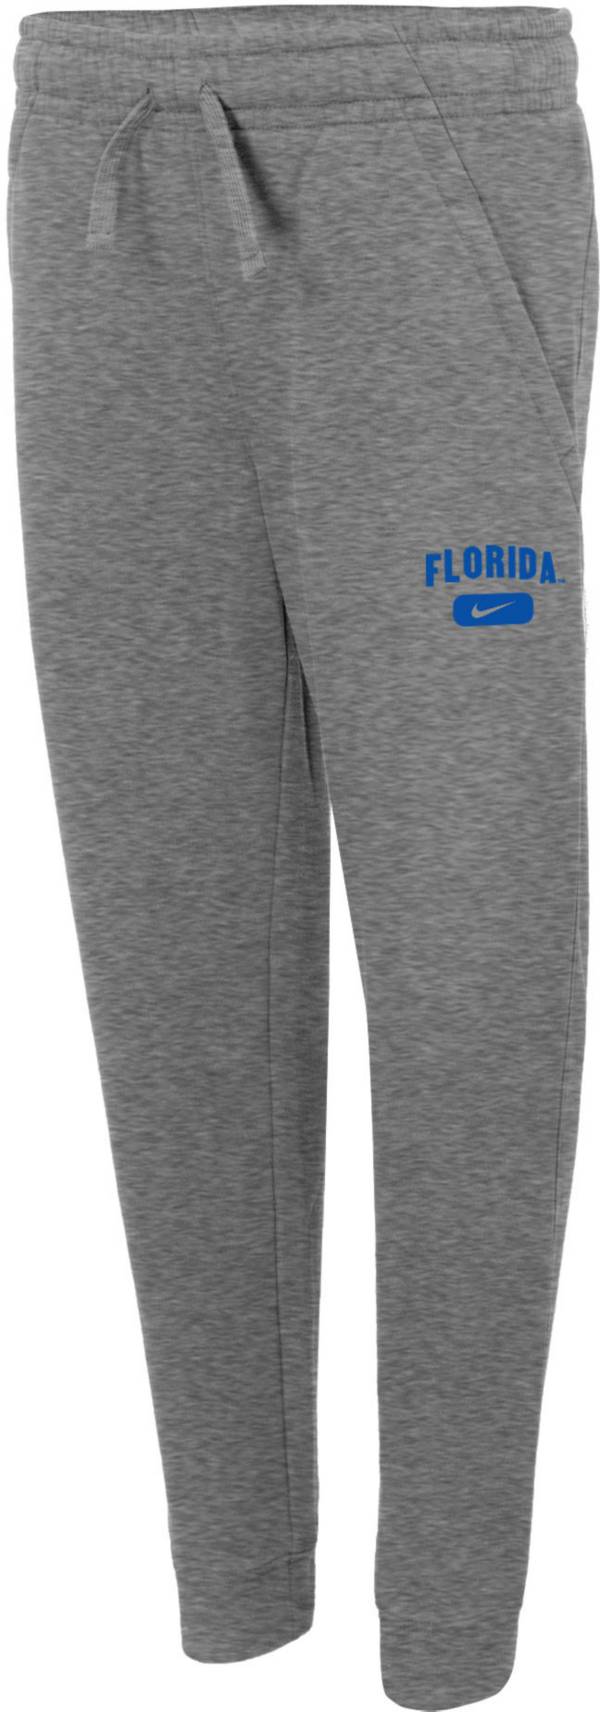 Nike Youth Florida Gators Grey Club Fleece Jogger Pants product image